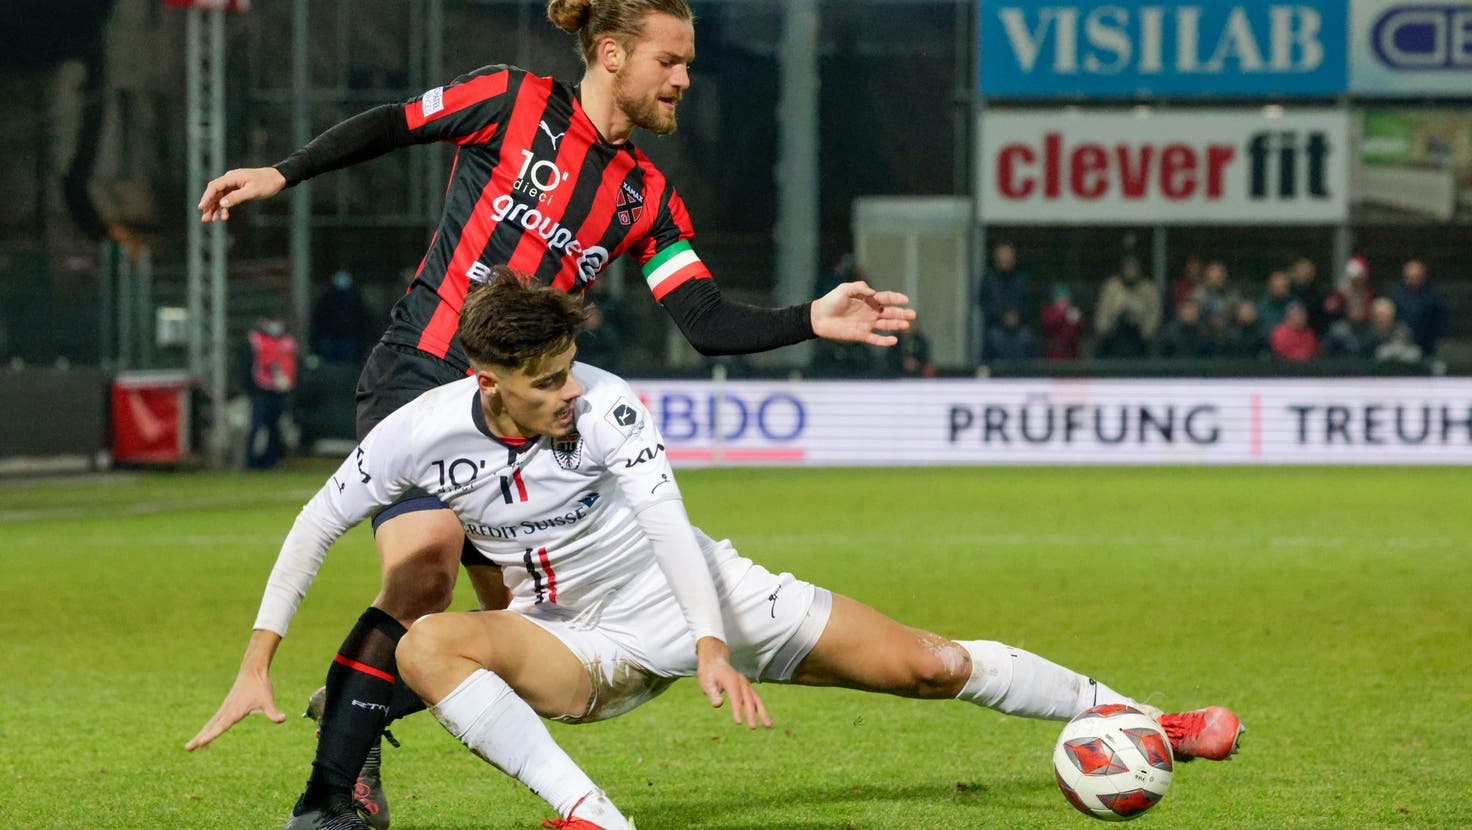 Jetzt live: Handspiel Njie, Penalty Nuzzolo – der FC Aarau liegt früh zurück